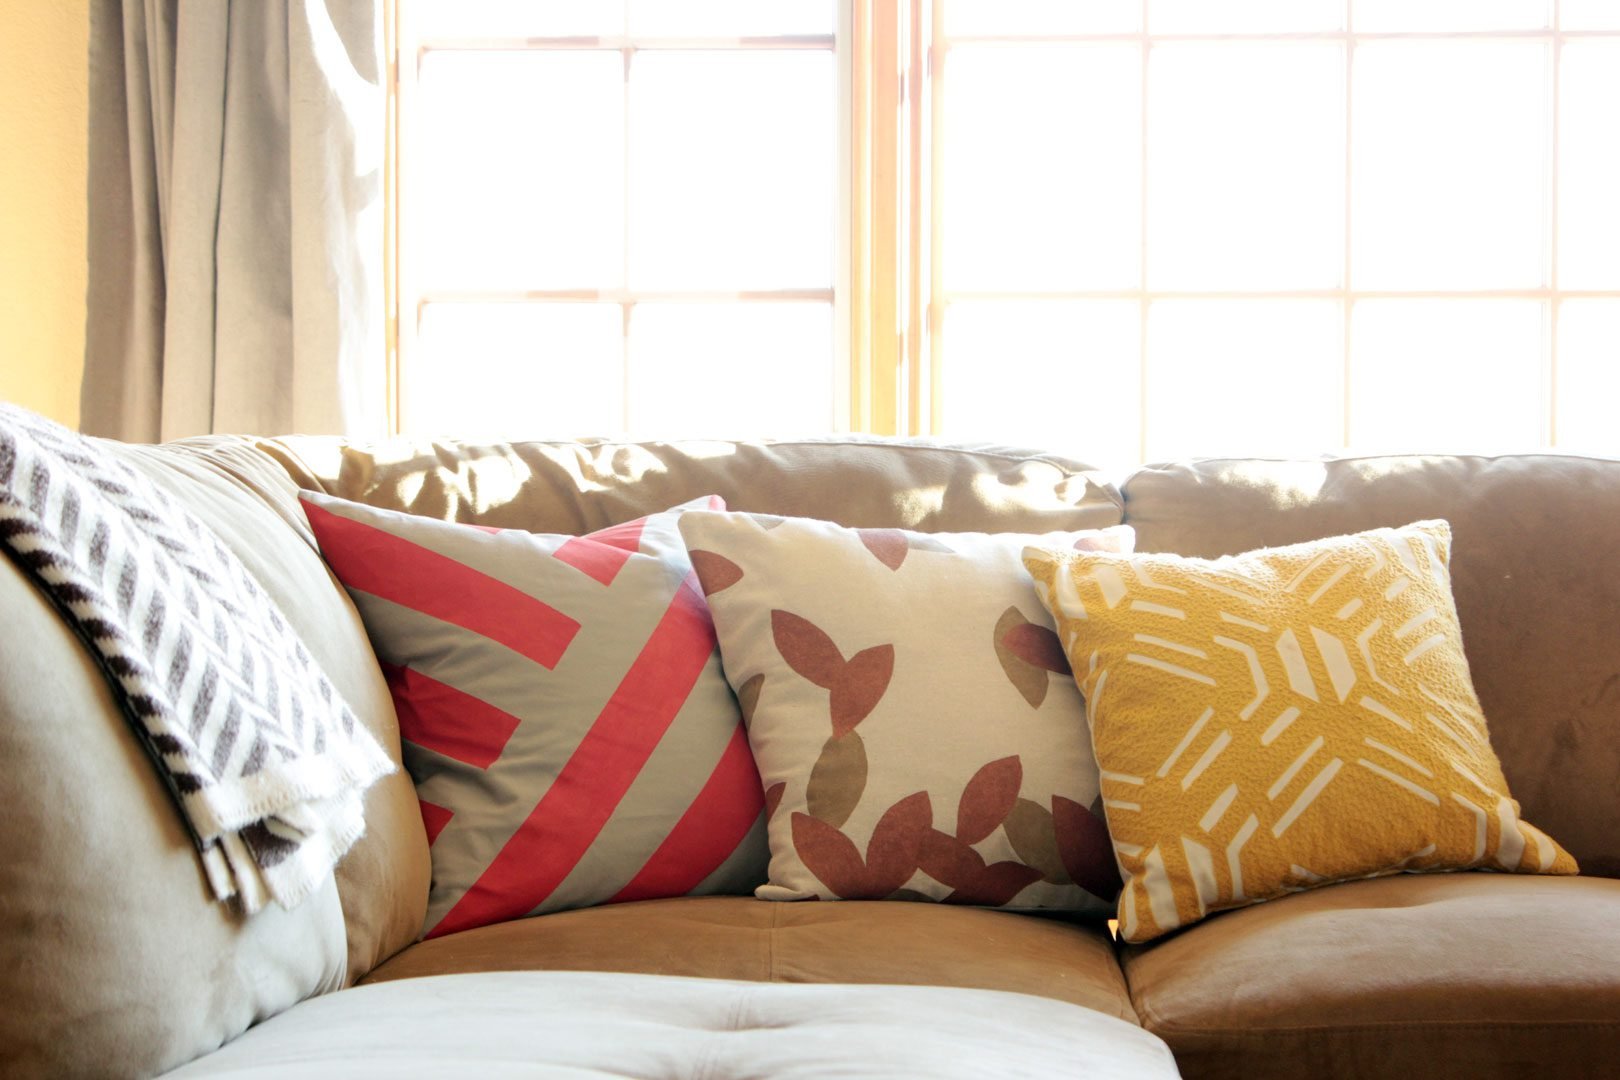 Фото дивана с подушками. Декоративные подушки. Подушка для дивана. Подушки декоративные на диван. Интерьерные подушки на диван.